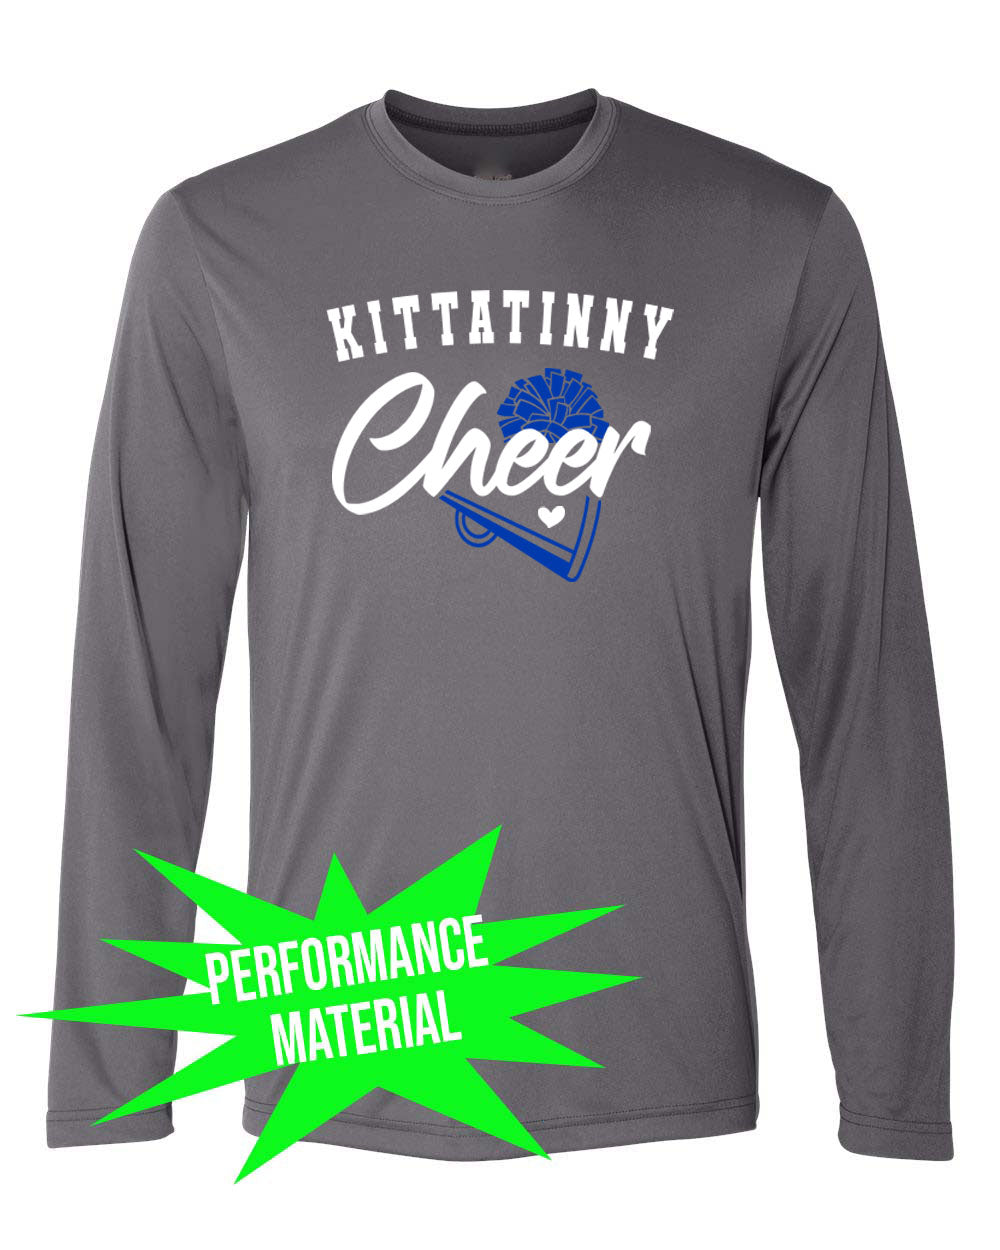 Kittatinny Cheer Performance Material Design 9 Long Sleeve Shirt